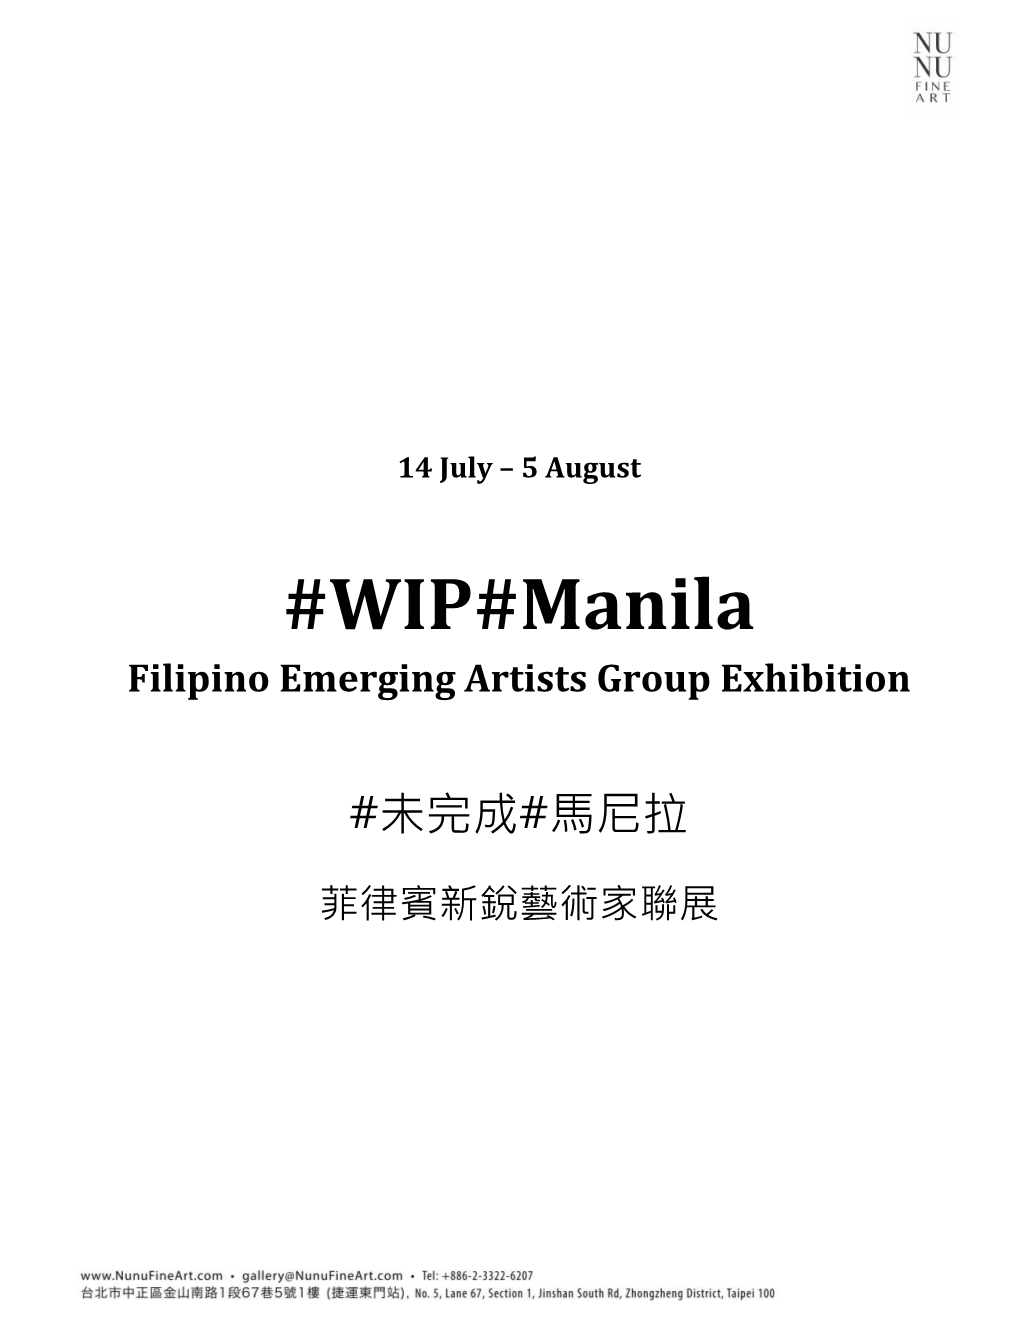 WIP#Manila Filipino Emerging Artists Group Exhibition